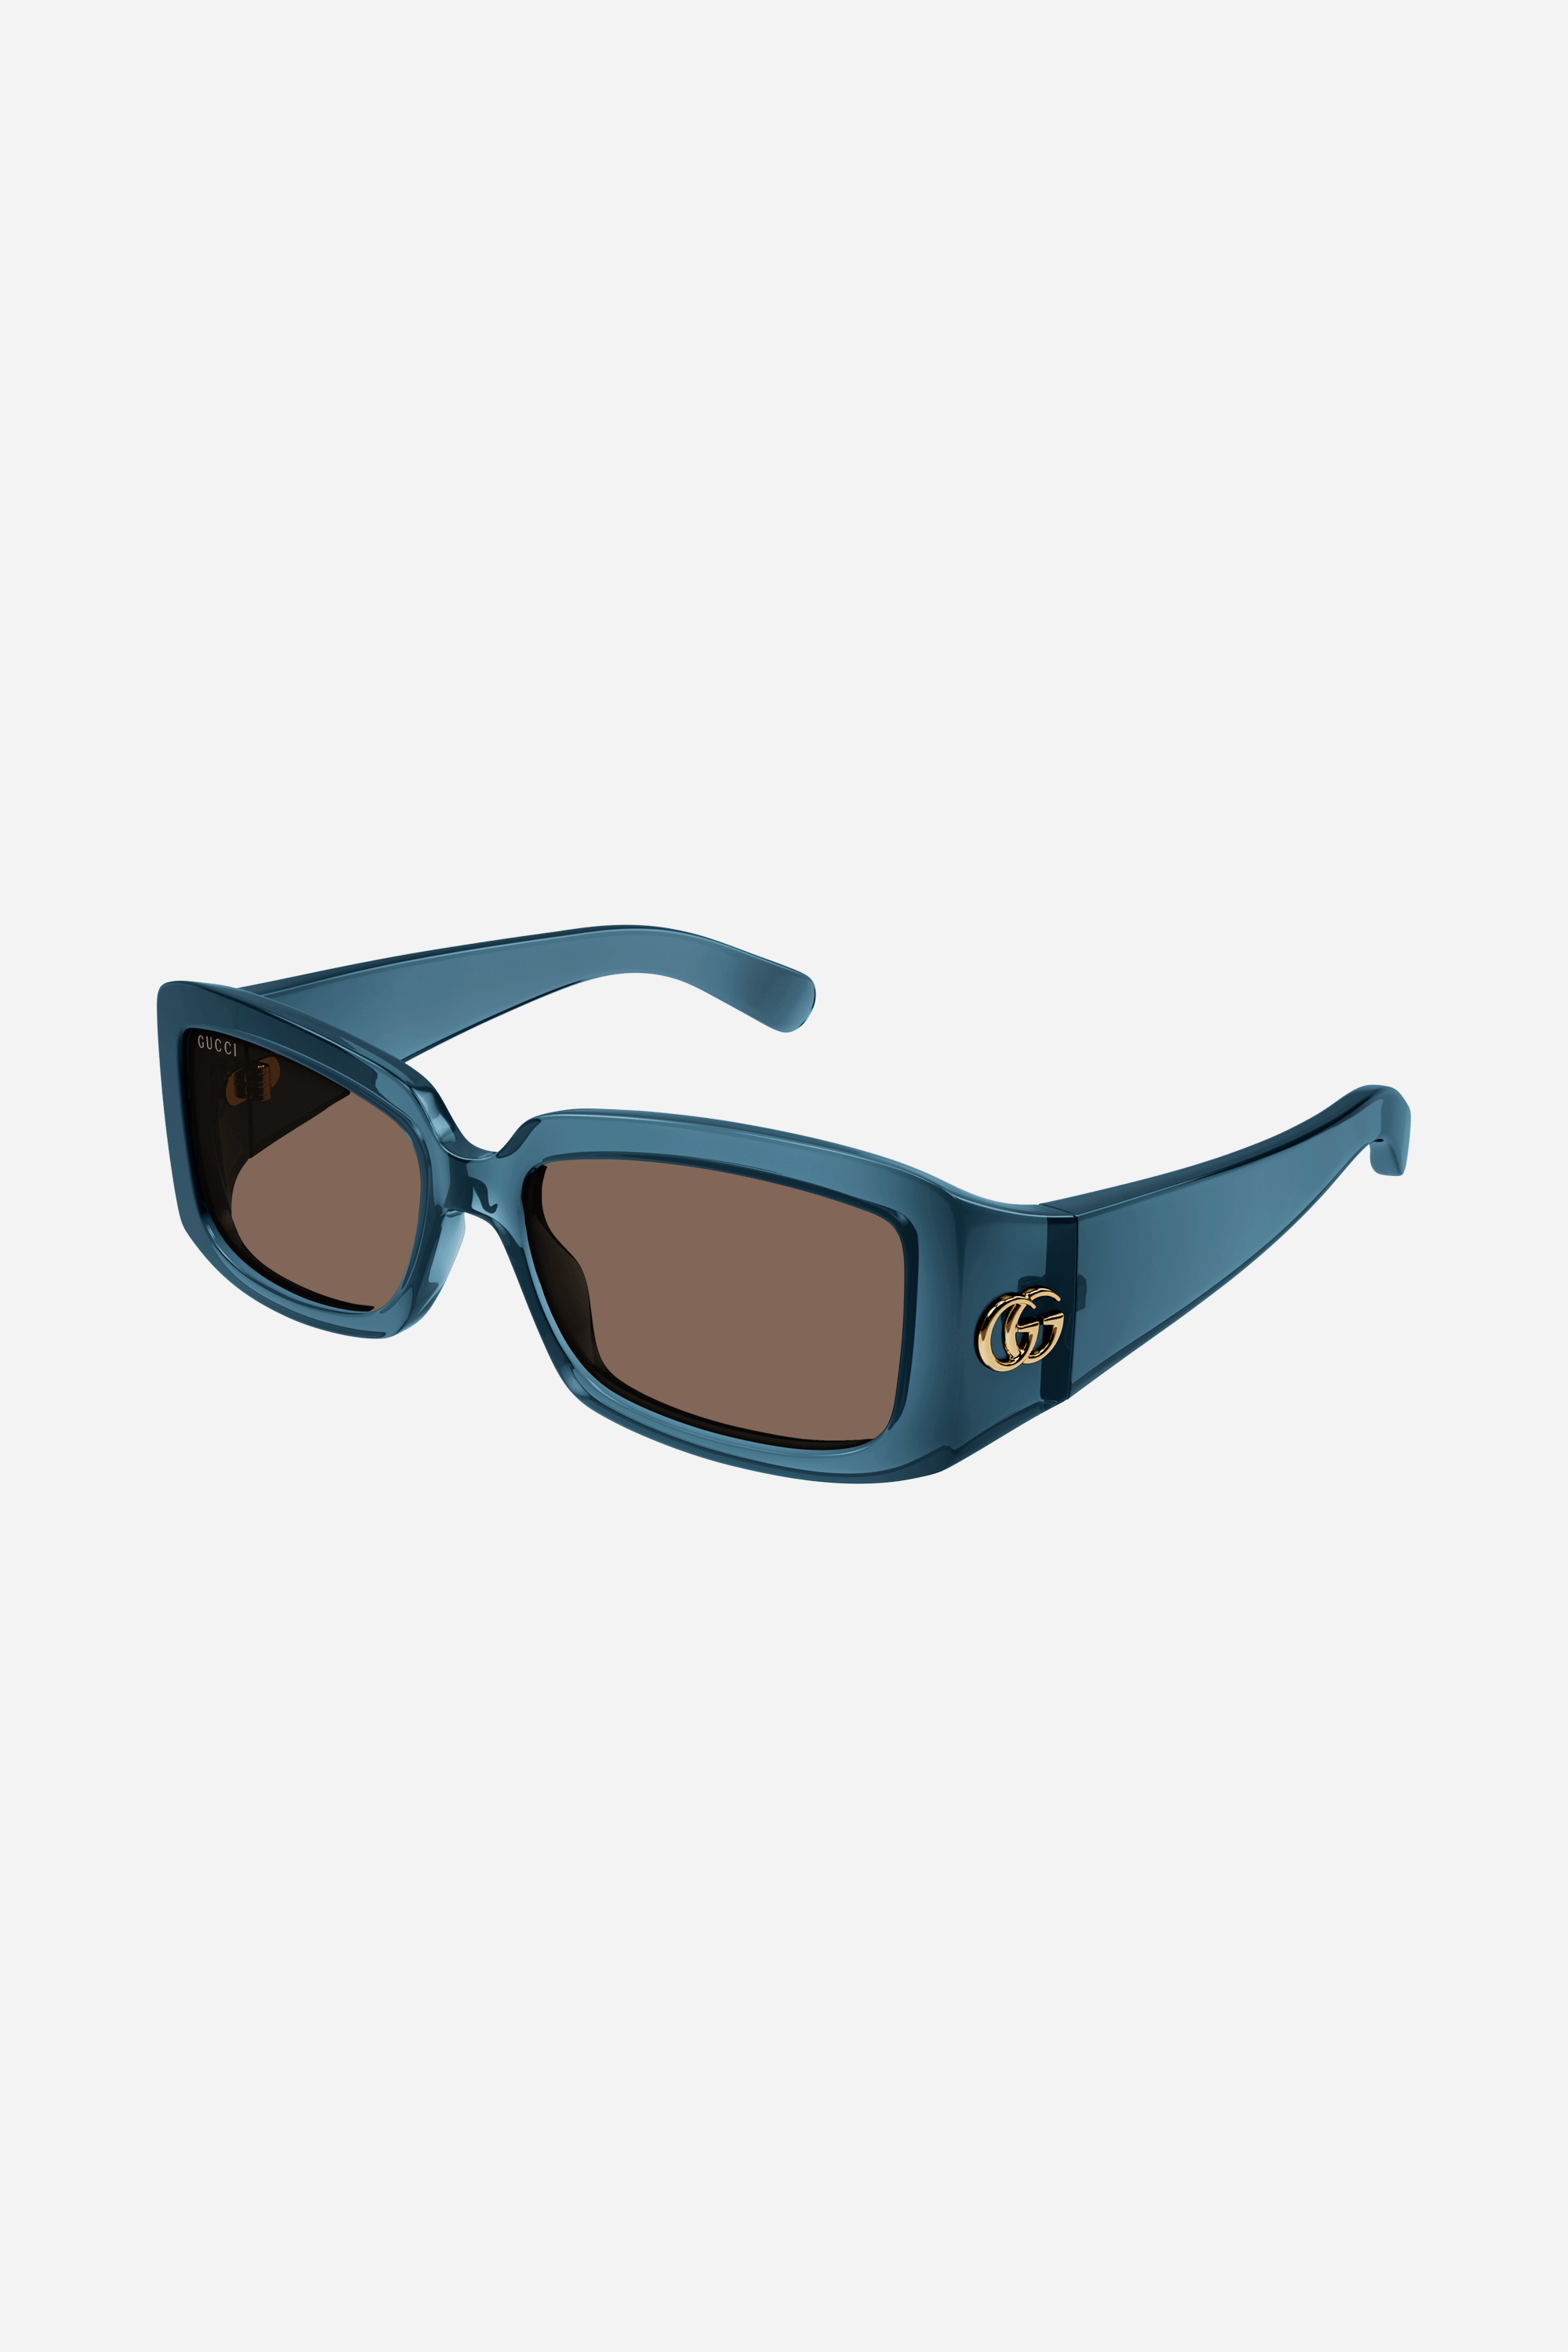 Gucci wrap around small blue sunglasses - Eyewear Club